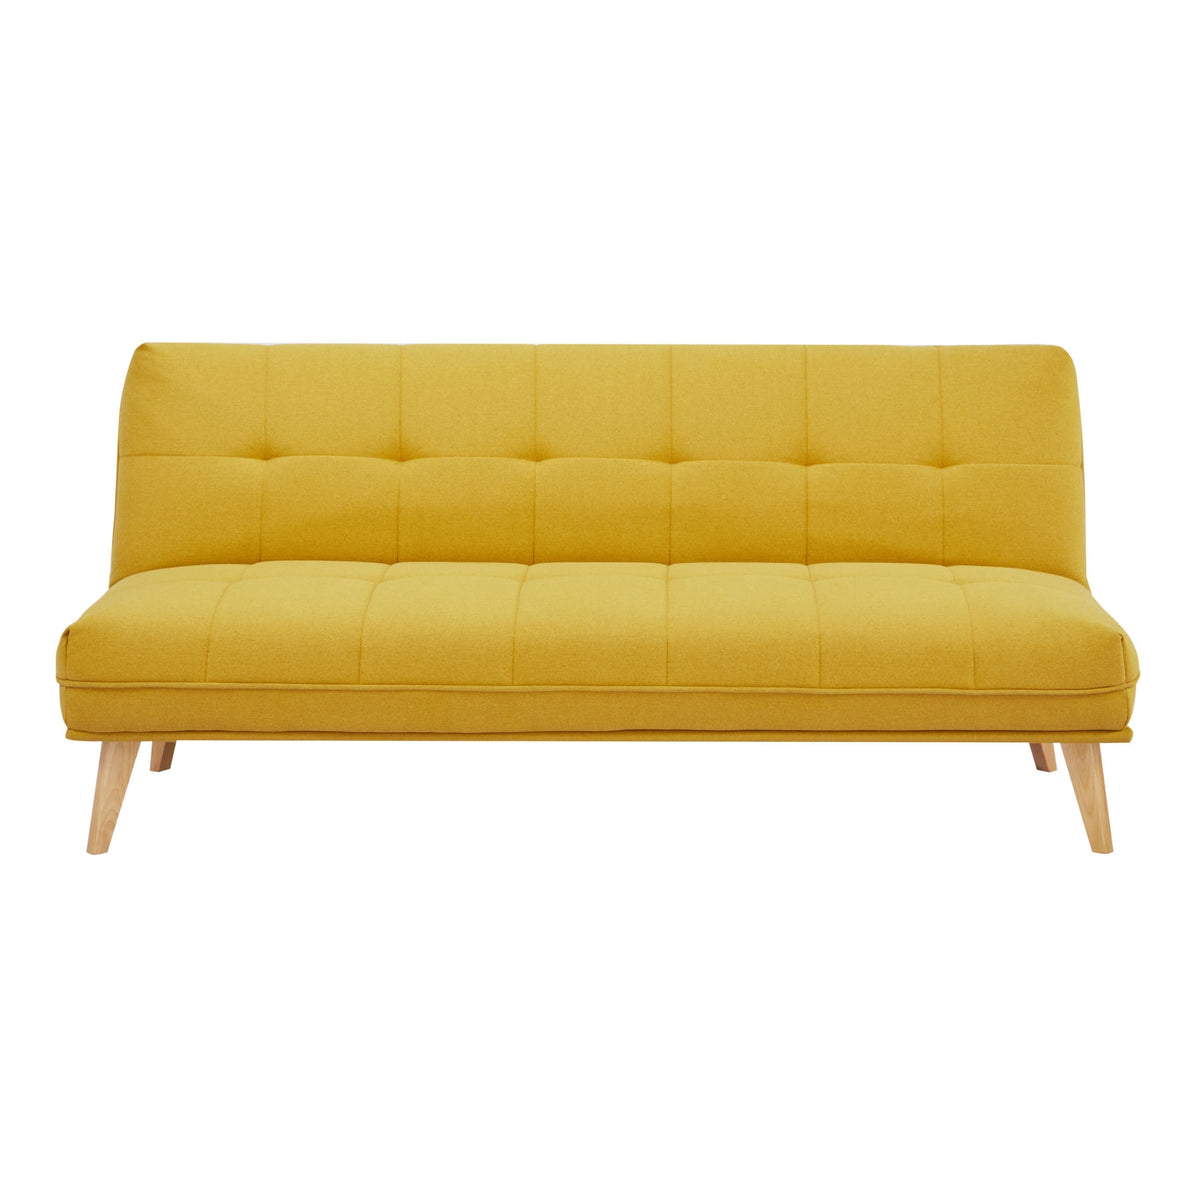 Jovie 3 Seater Fabric Sofa Bed Yellow 